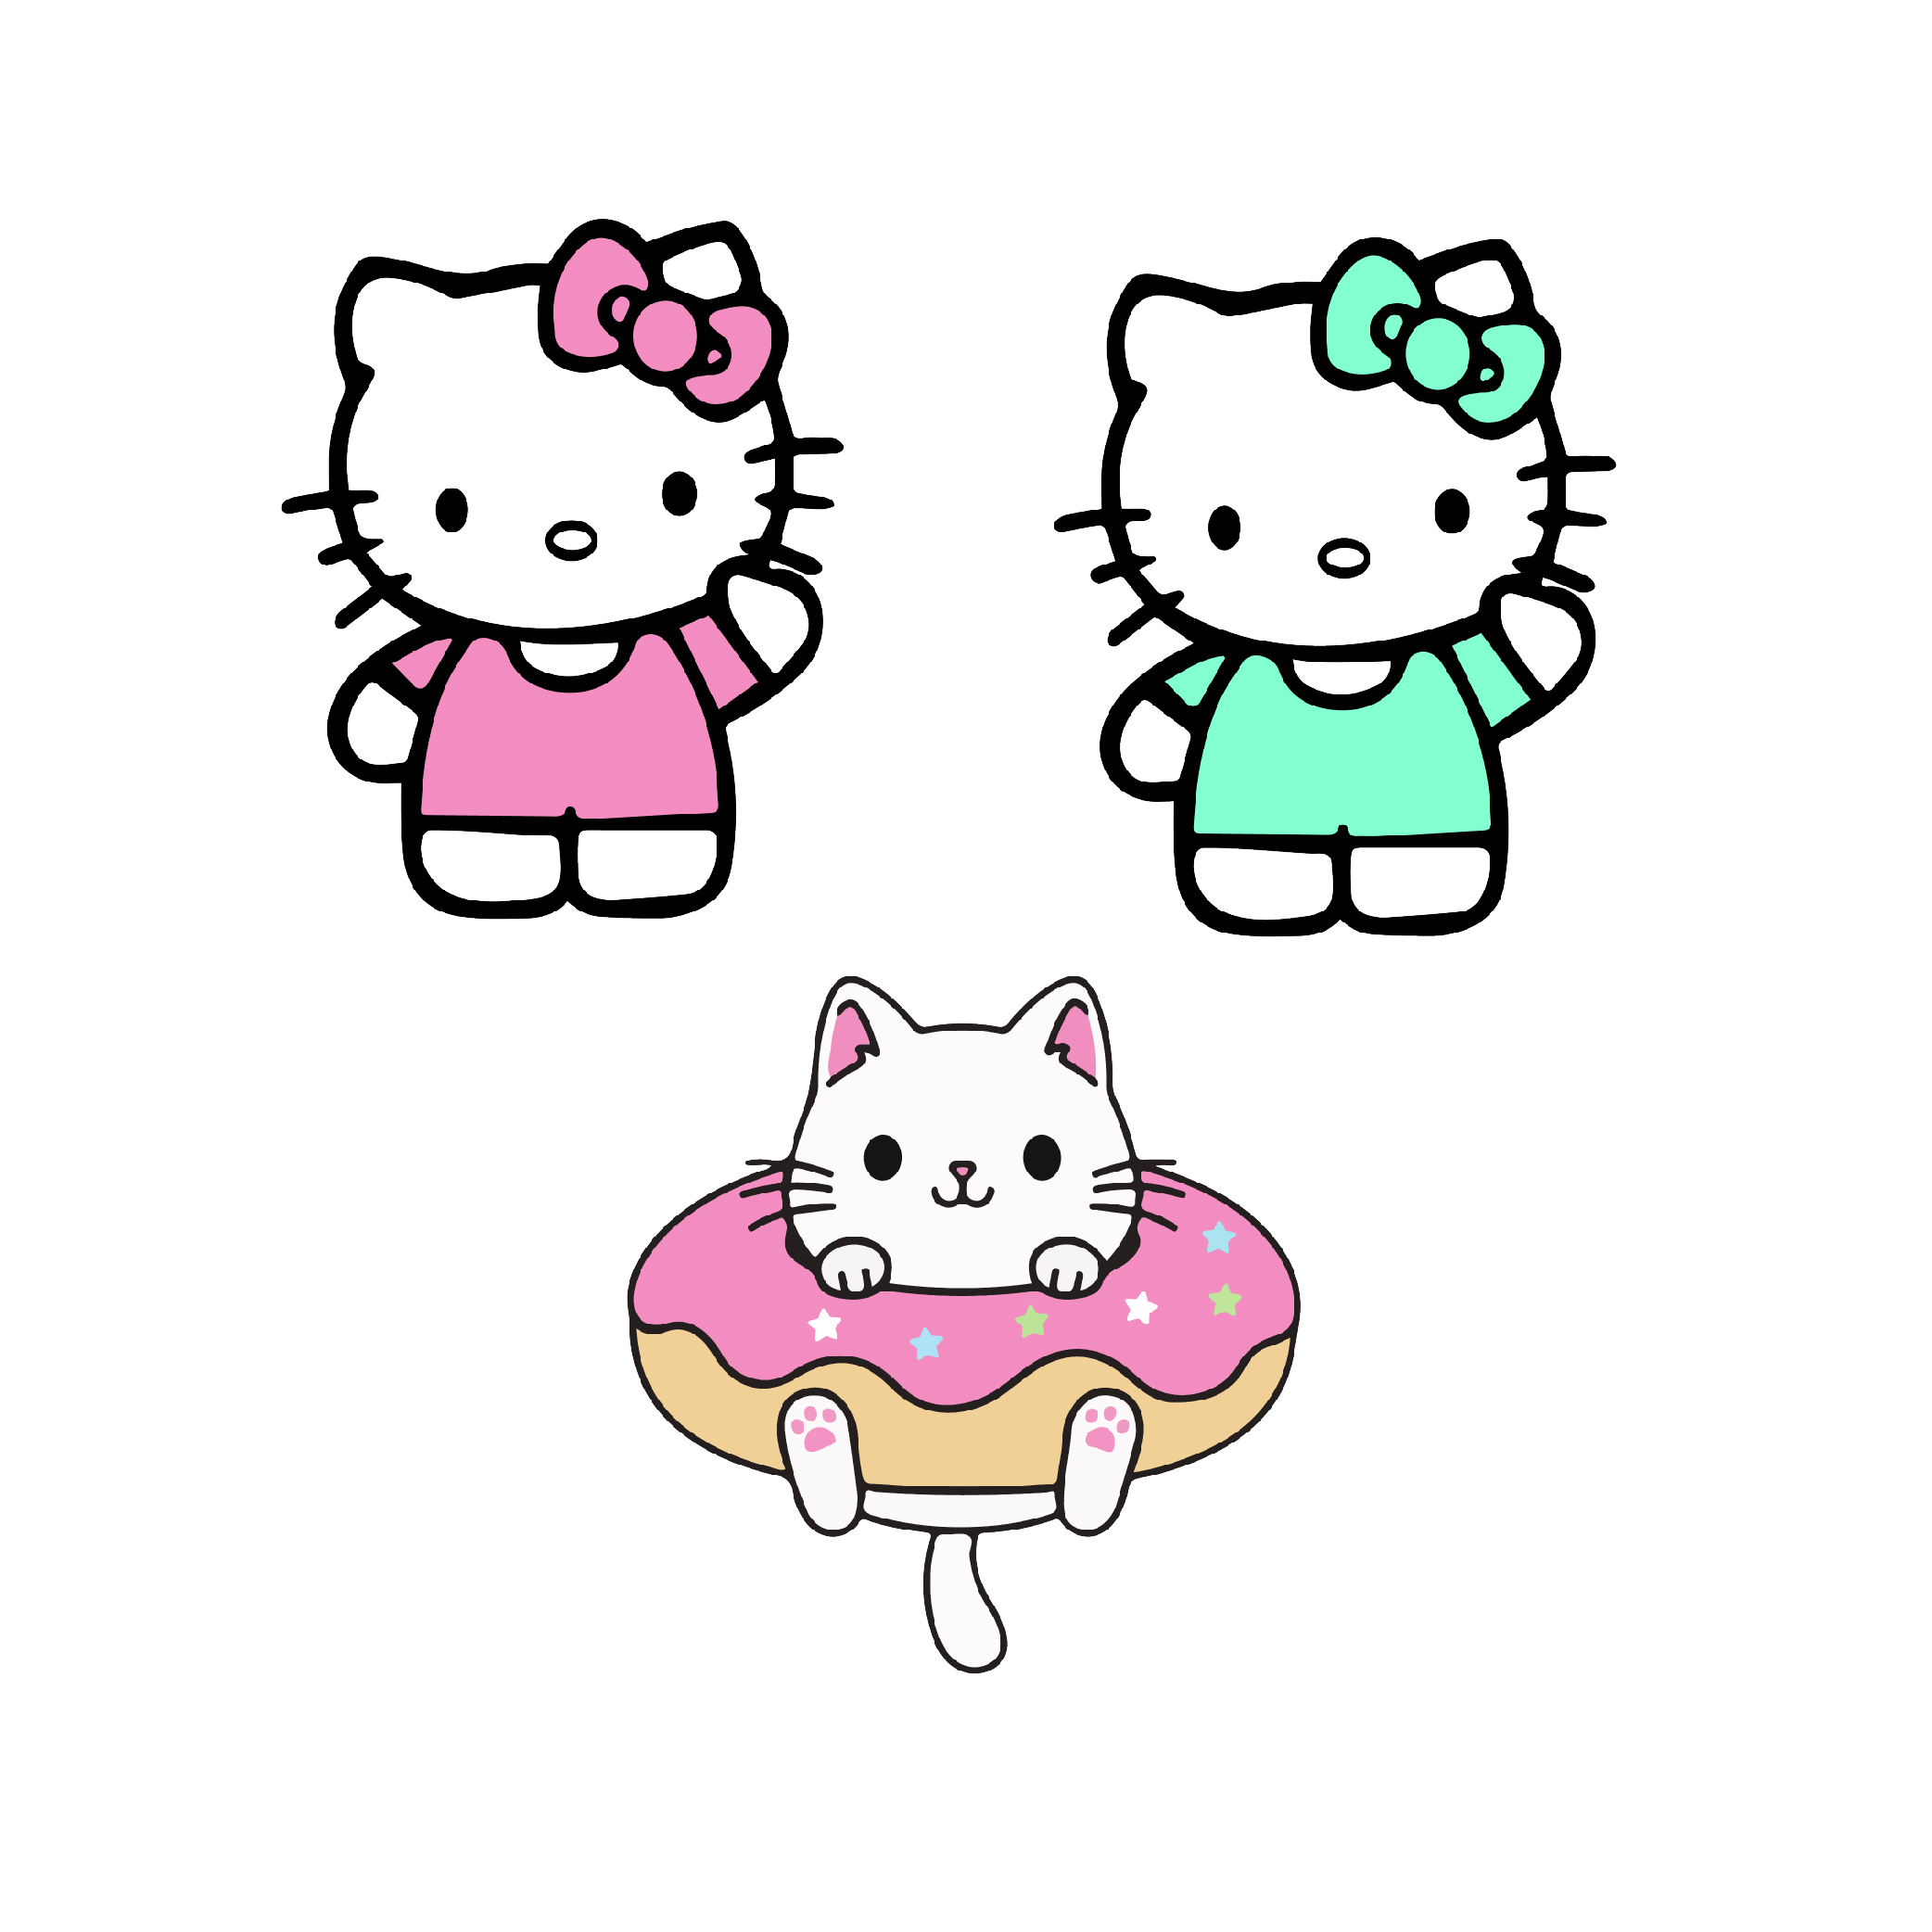 Hello Kitty Pattern Stock Vector Illustration and Royalty Free Hello Kitty  Pattern Clipart